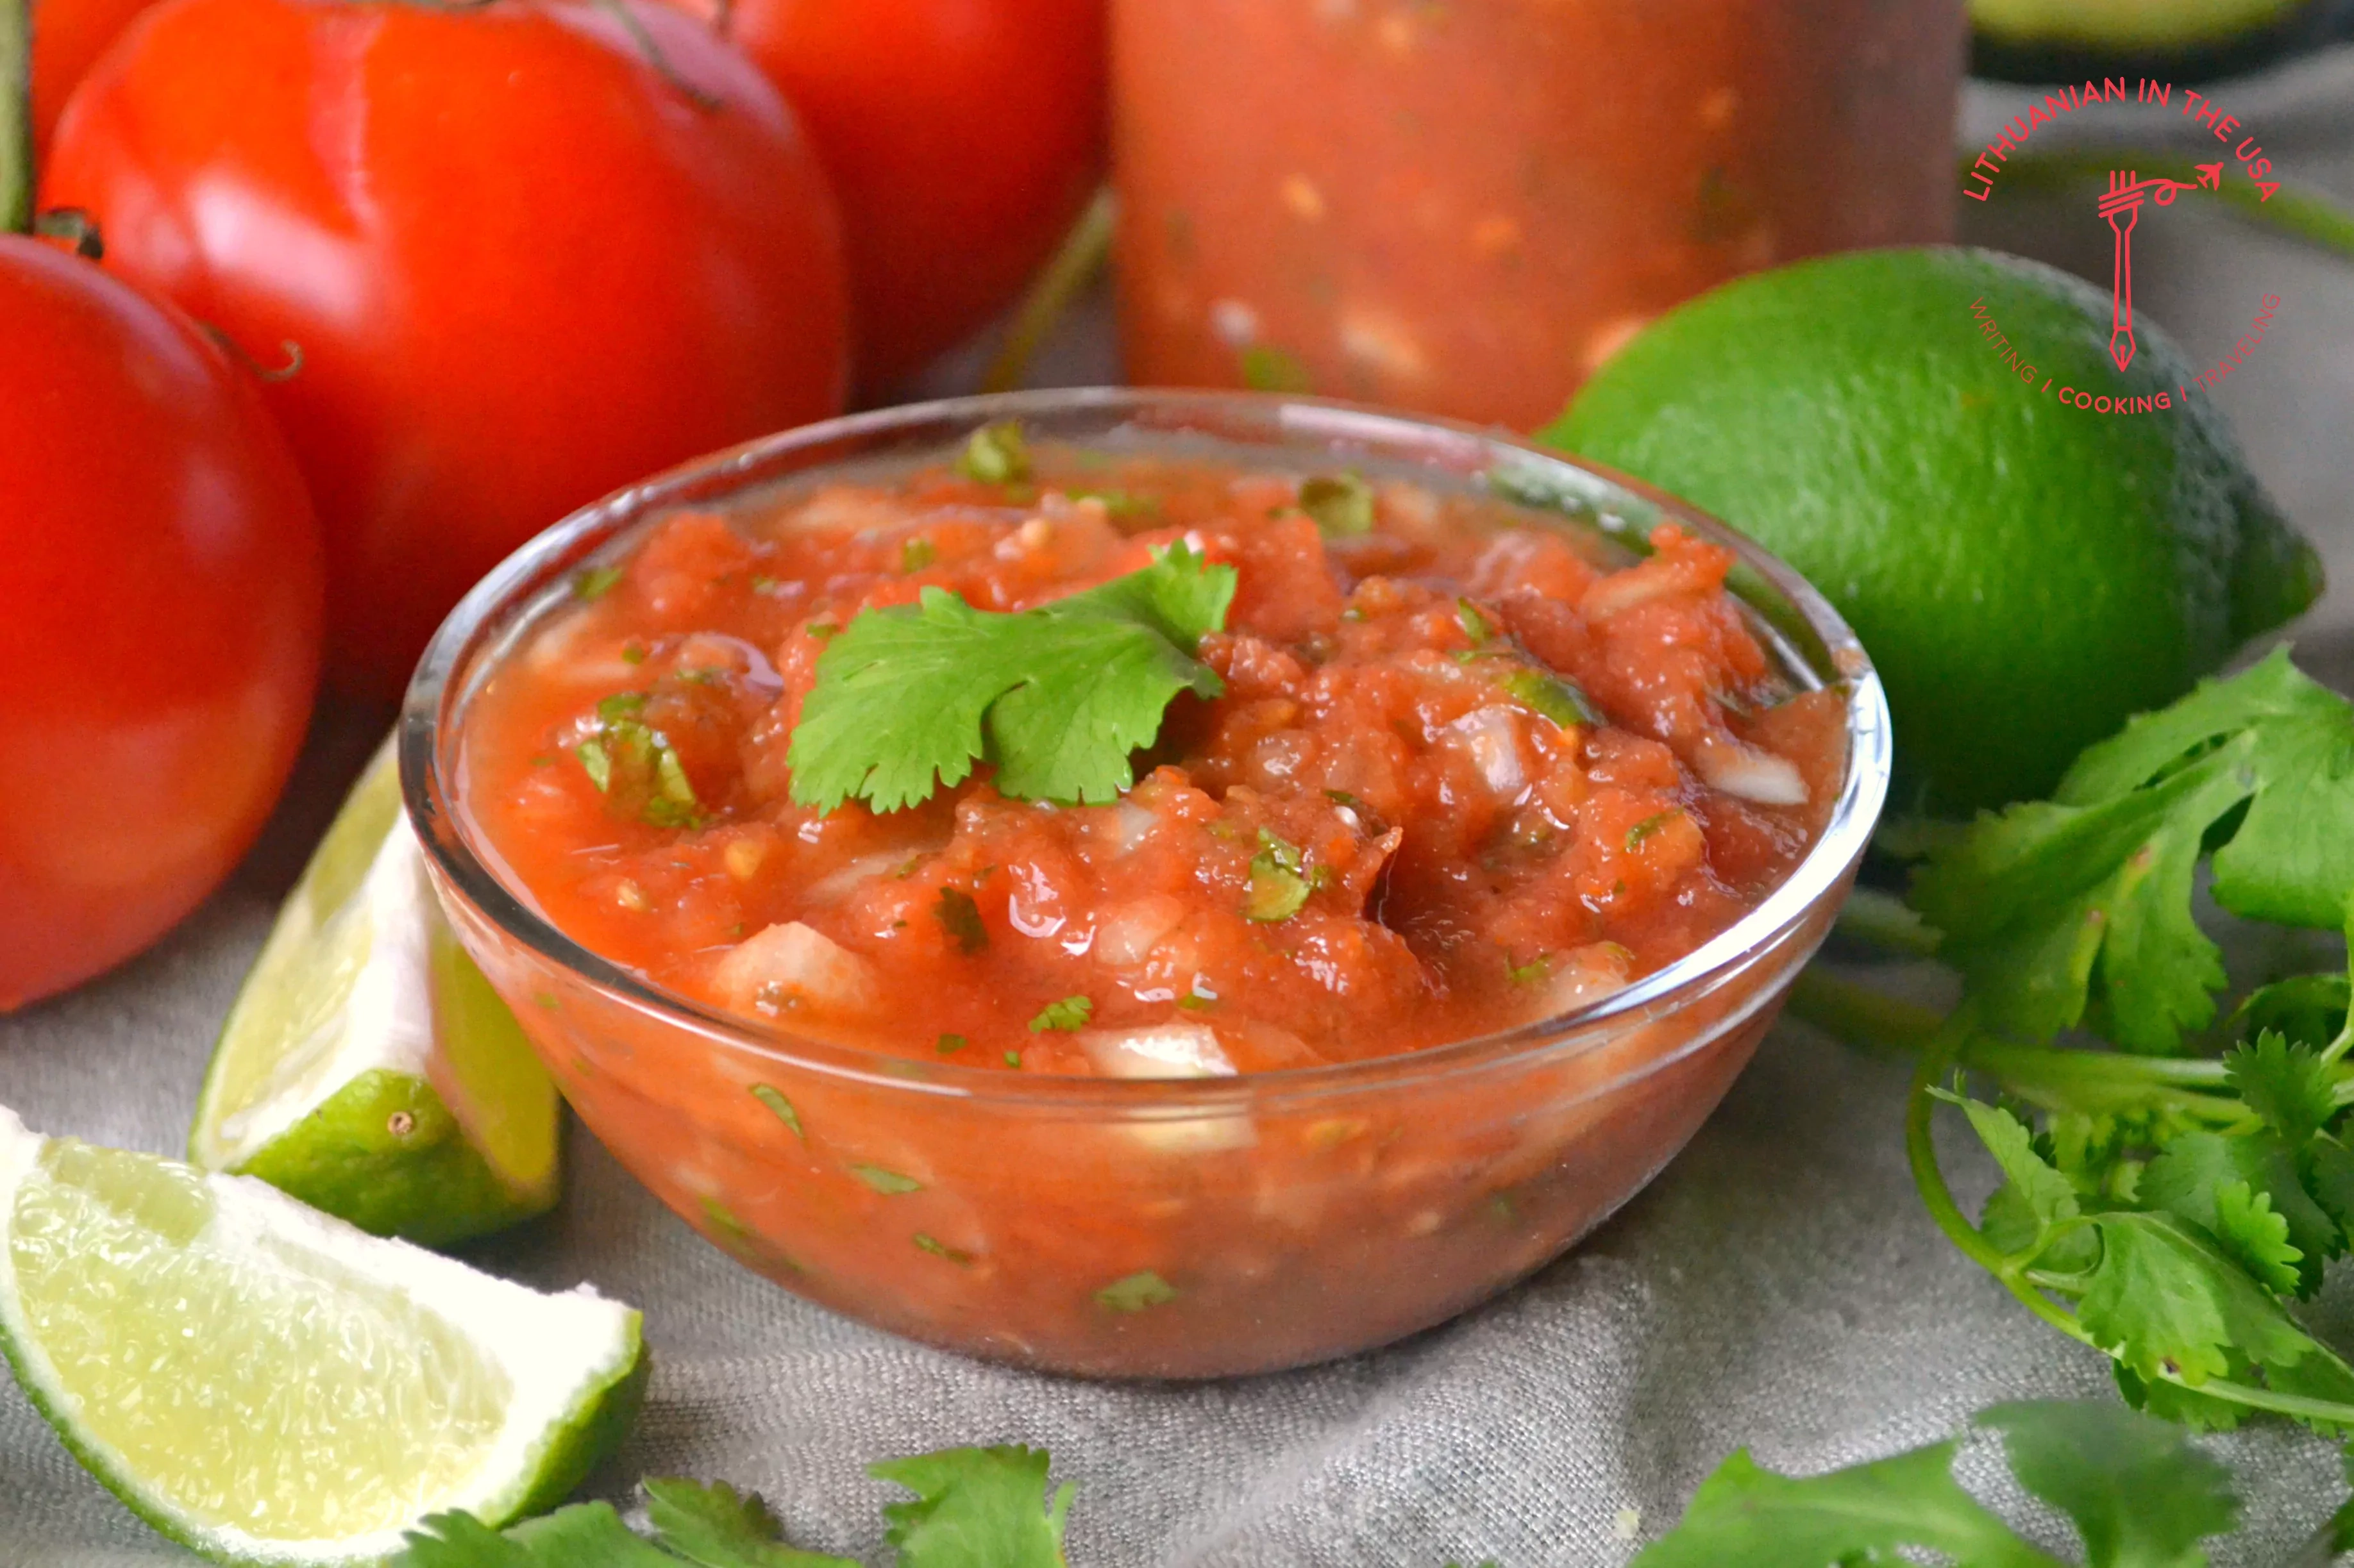 Meksykański sos pomidorowy do tacos i chipsów tortilla (Salsa de Tomate)